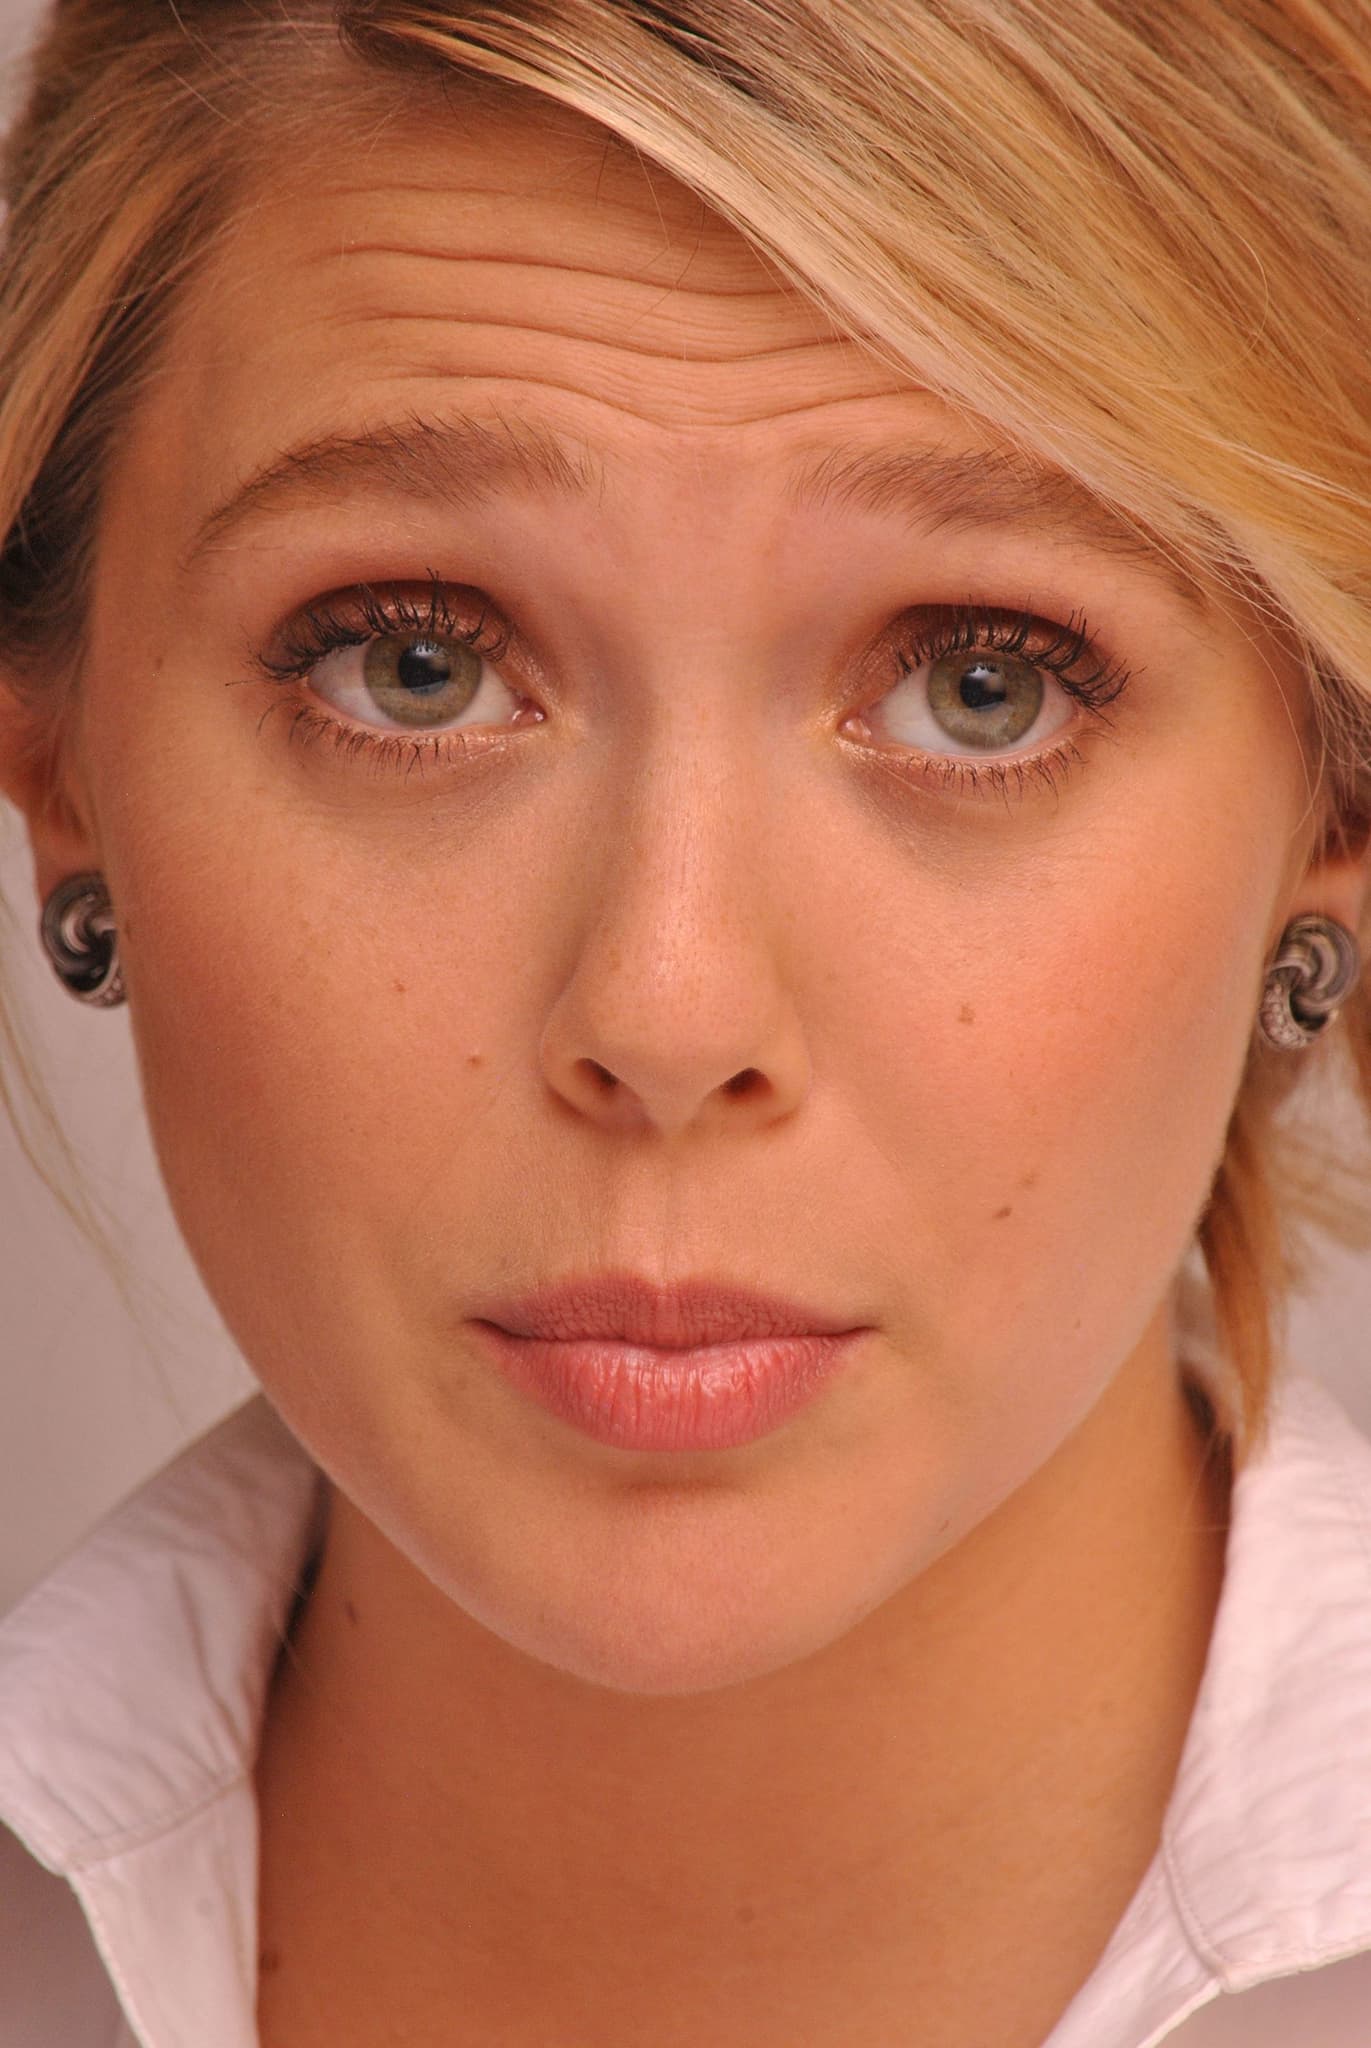 Elizabeth Olsen eyes High Resolution wallpaper Image